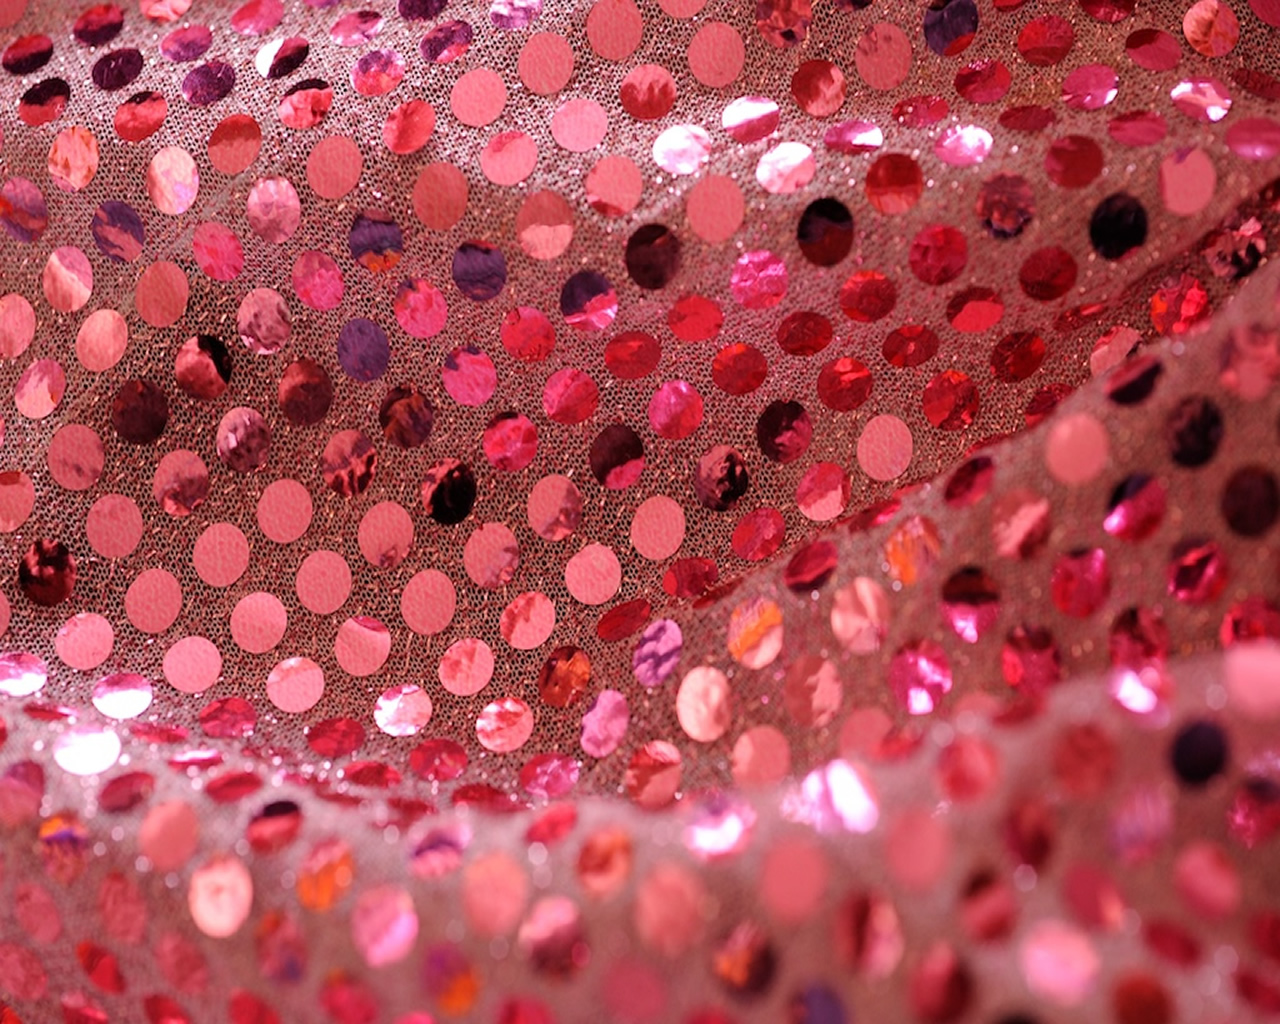 Pink Glitter Free Images at Clkercom   vector clip art online